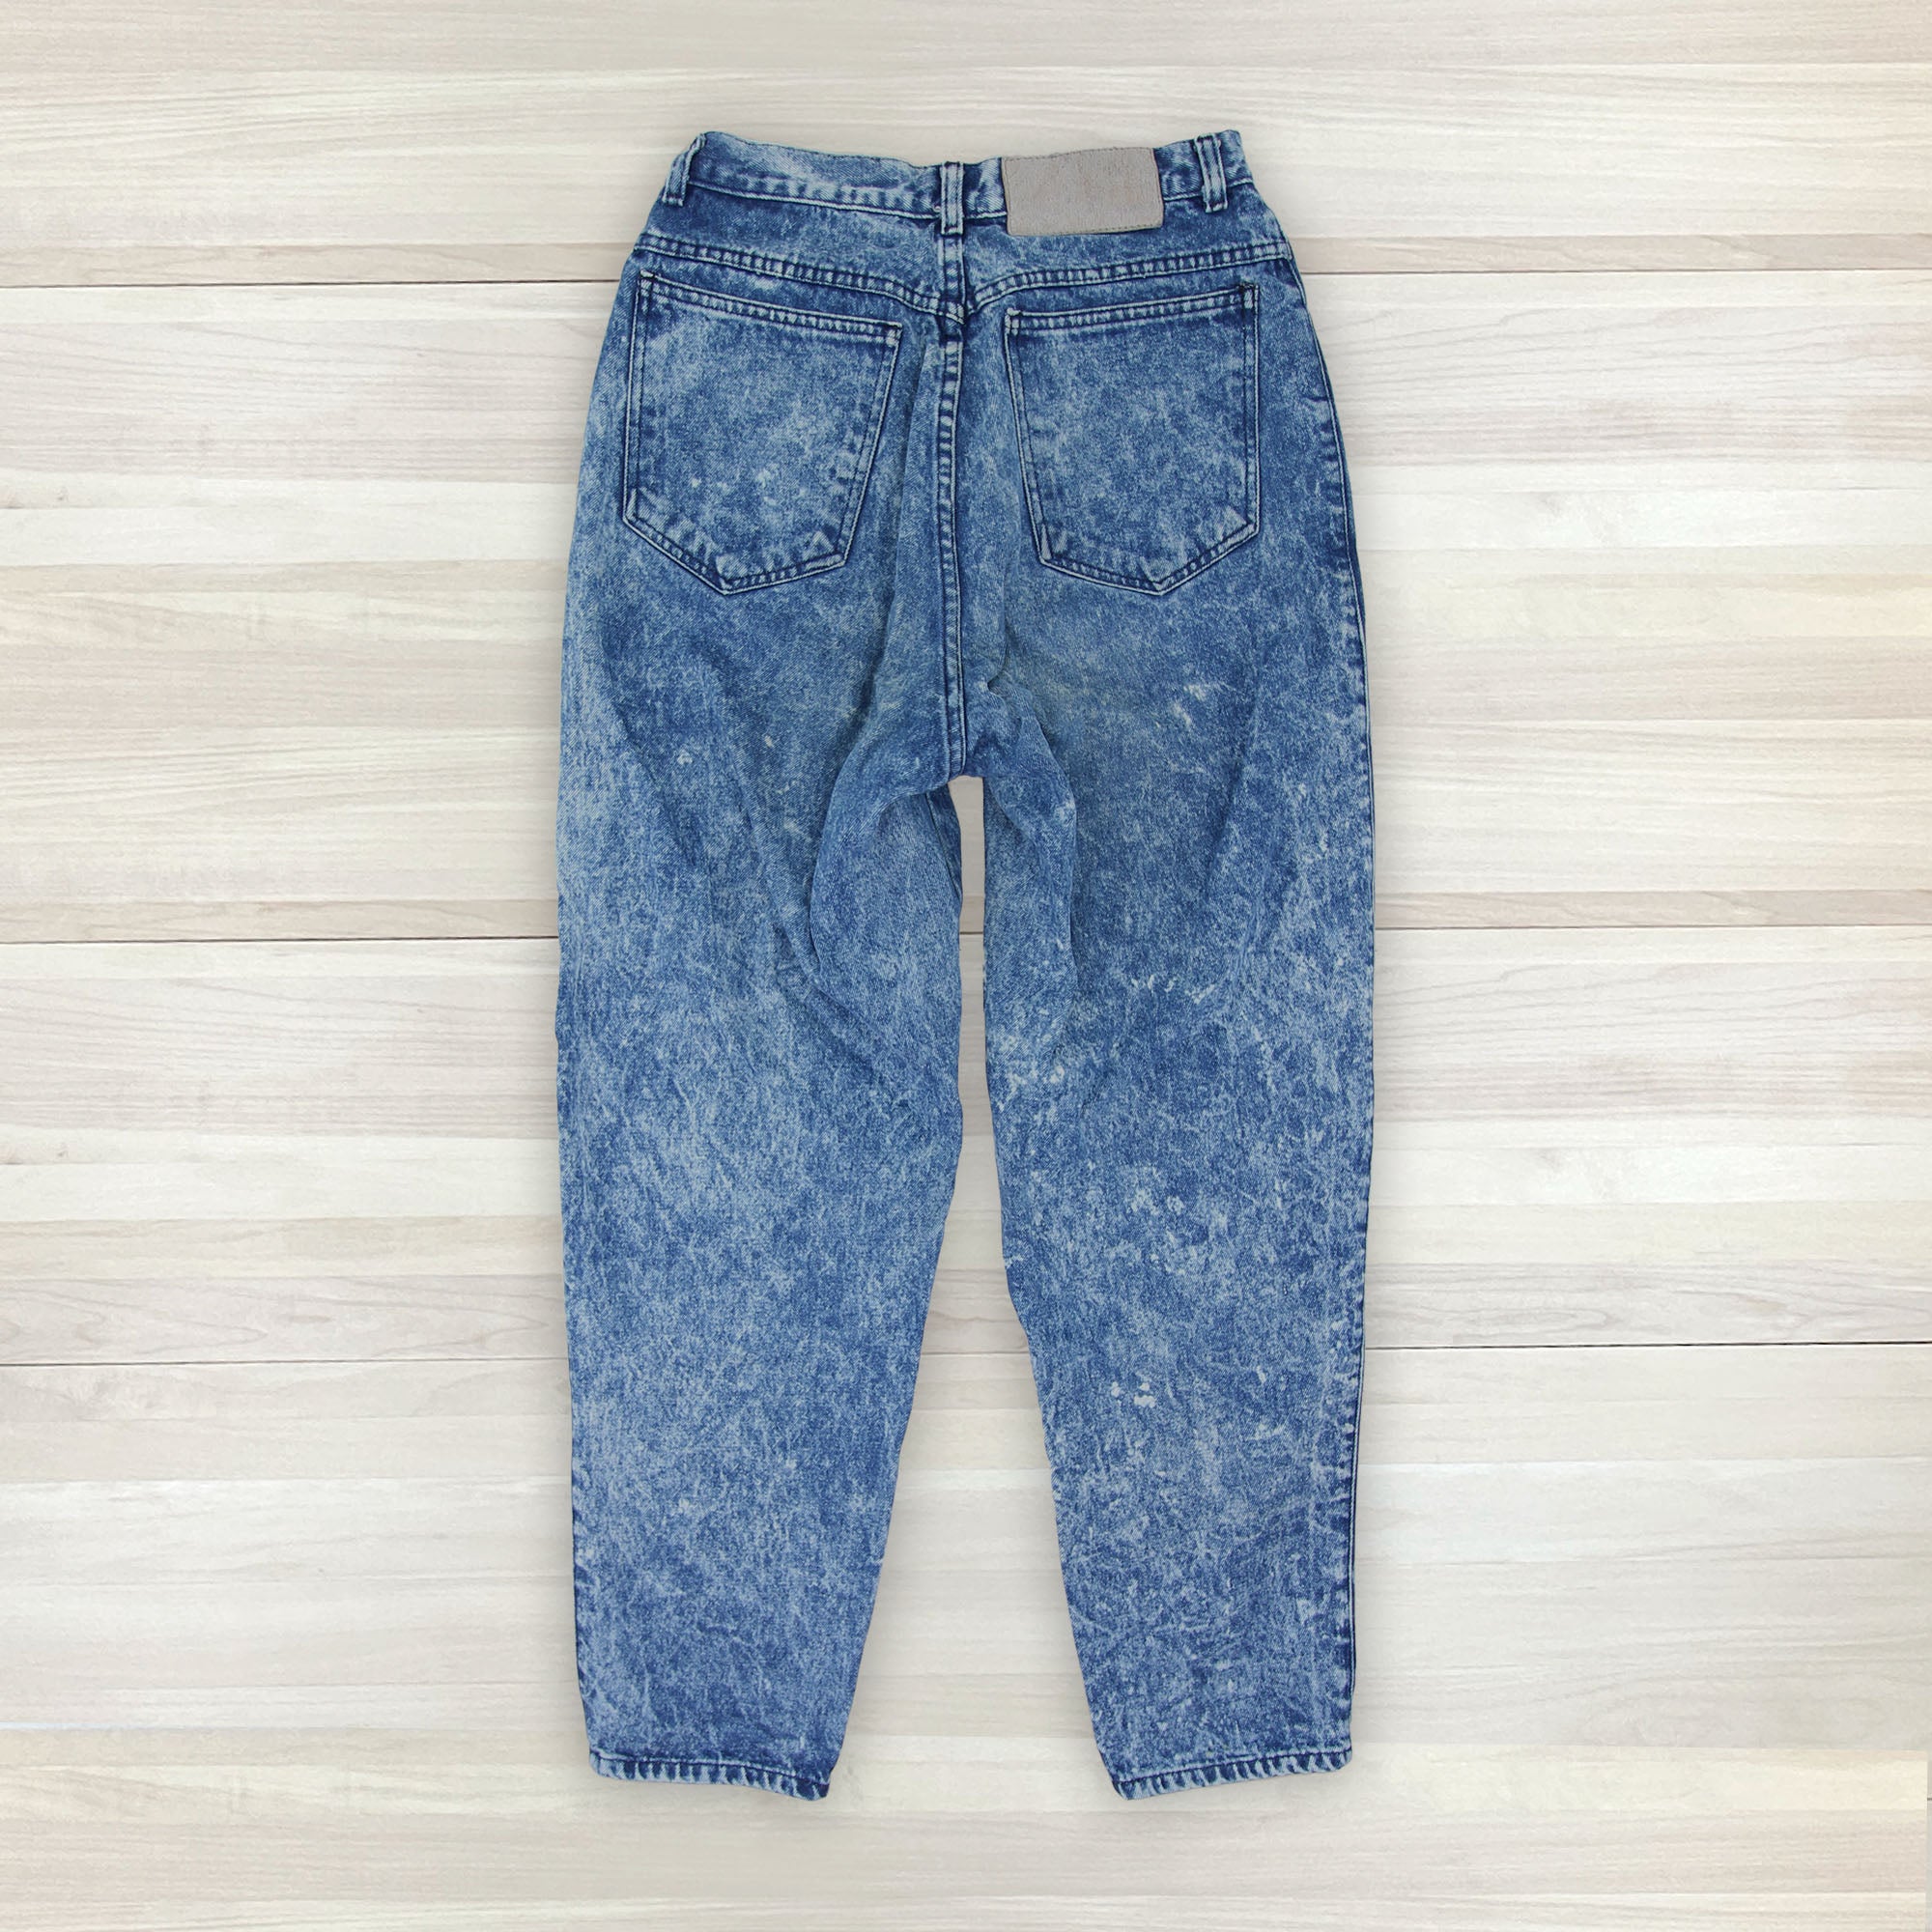 Women's Vintage Bonjour High Rise Tapered Acid Wash Jeans - 28 Waist - 0